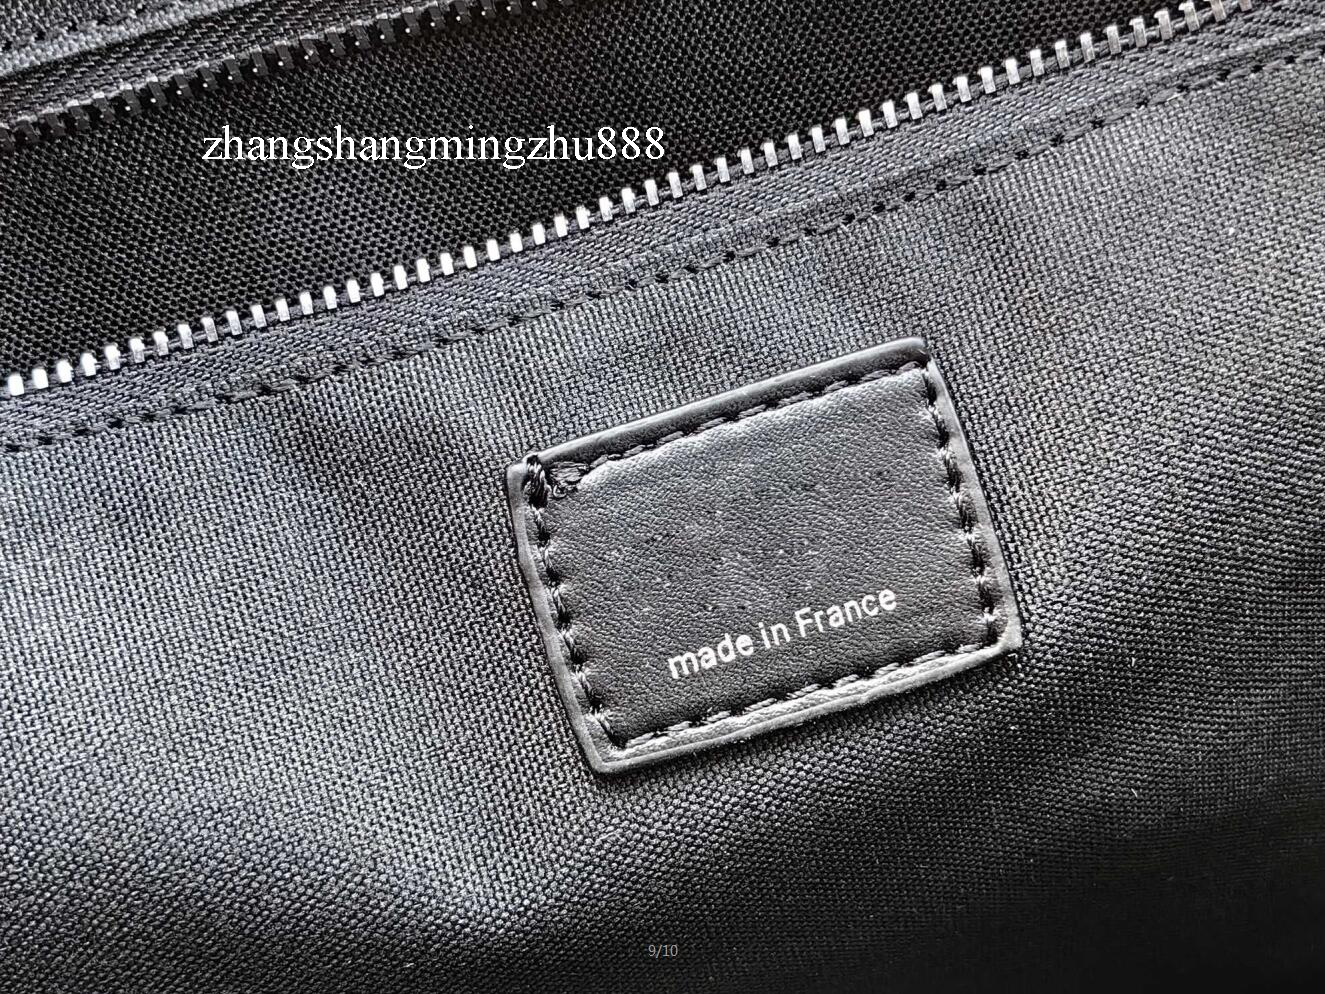 Luxurys Designers Bags Briefcase Men Business Packageラップトップバッグリアルレザーハンドバッグメッセンジャーハイキャパシティショルダーハンドバッグ汎用性のあるスタイルのトートハンドバッグ